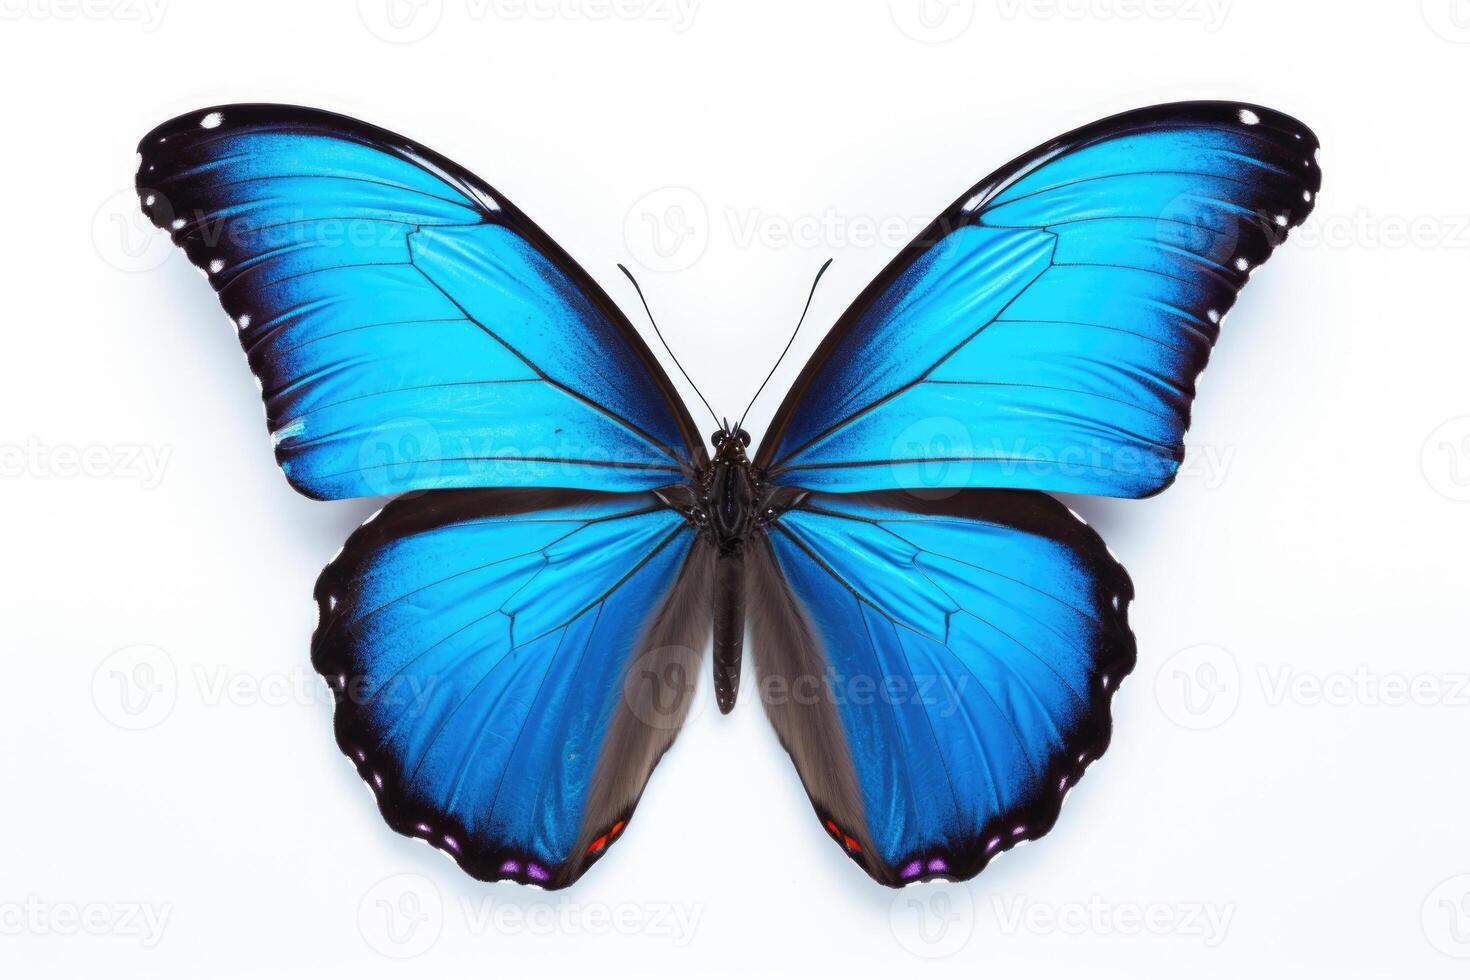 ai gerado azul monarca borboleta isolado em branco fundo foto